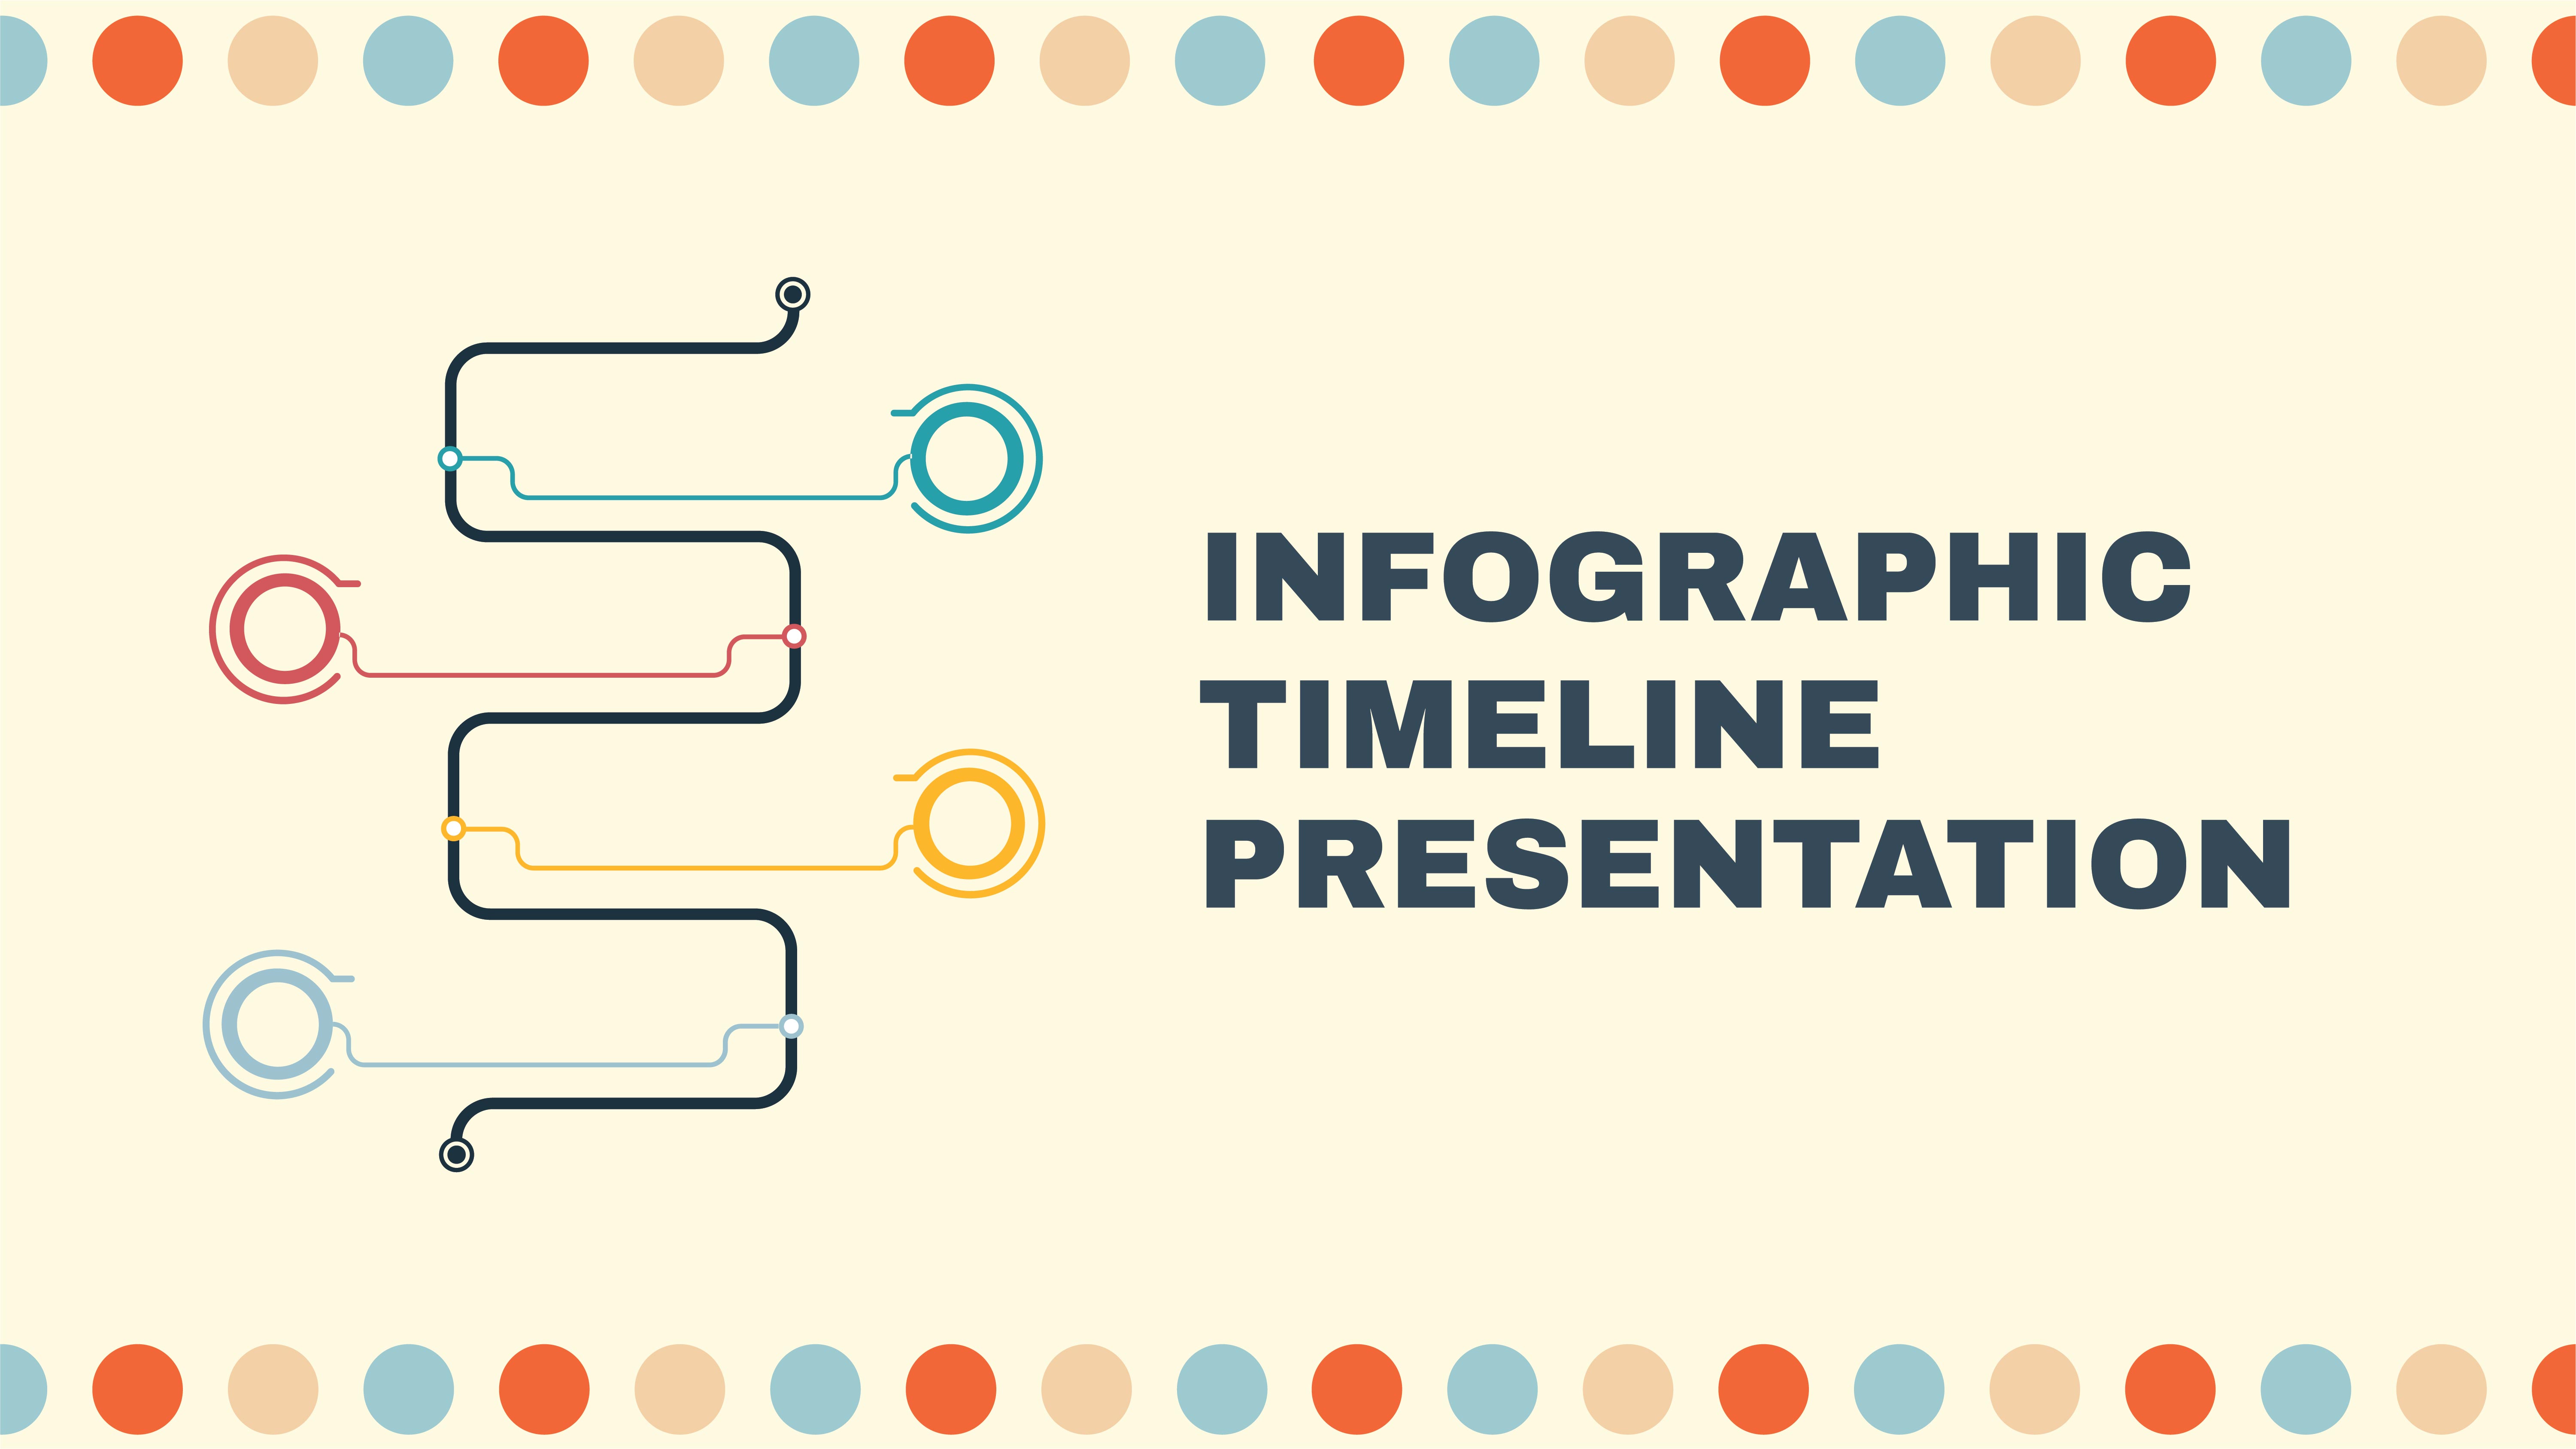 Timeline Infographic Presentation Template